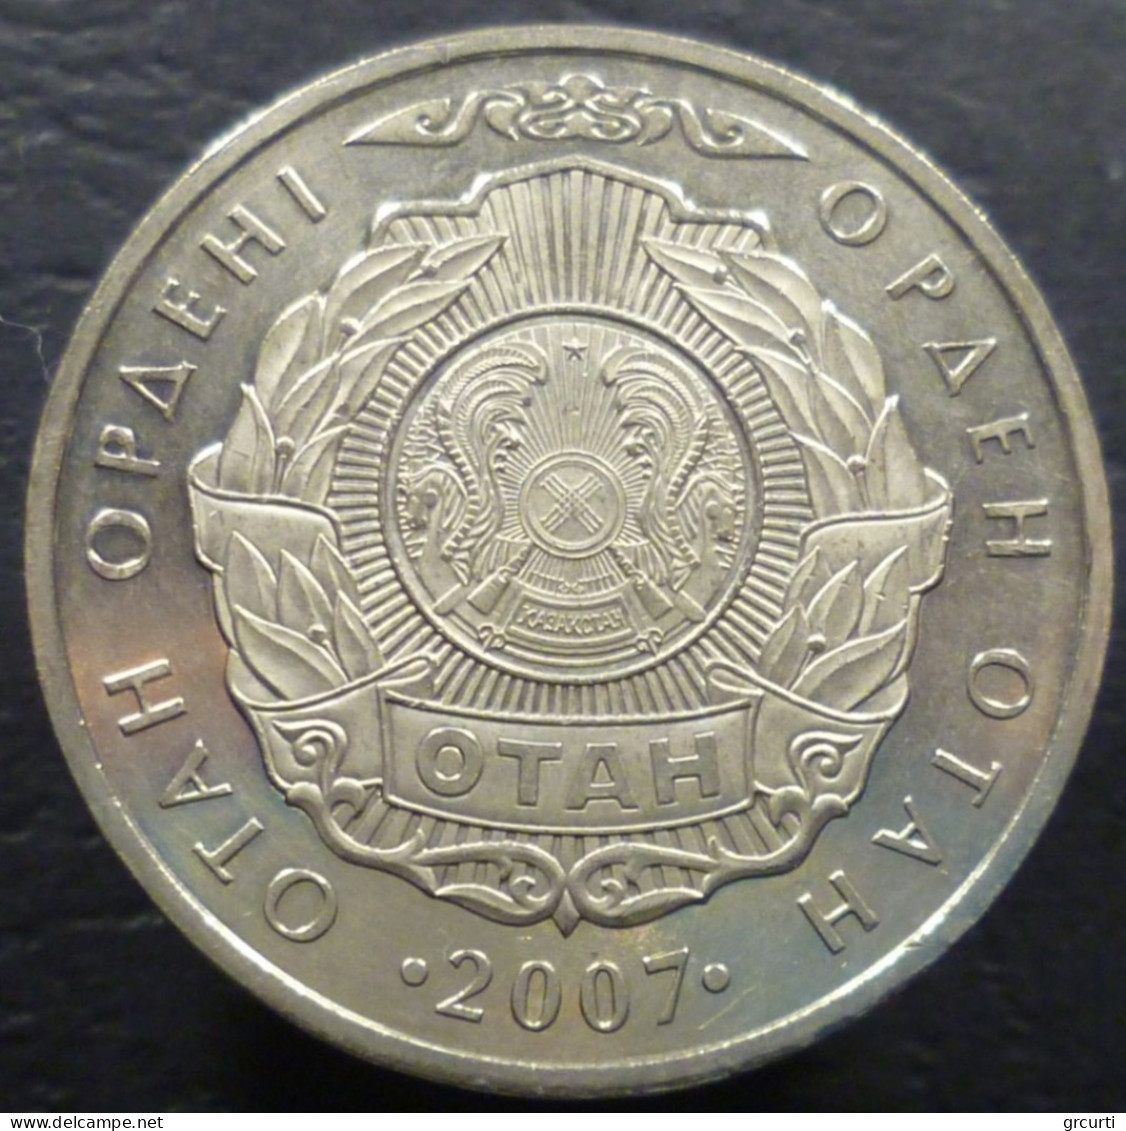 Kazakistan - 50 Tenge 2007 - Serie D'onorificenze - Ordine Della Patria (Отан ордені) - KM# 165 - Kazakistan